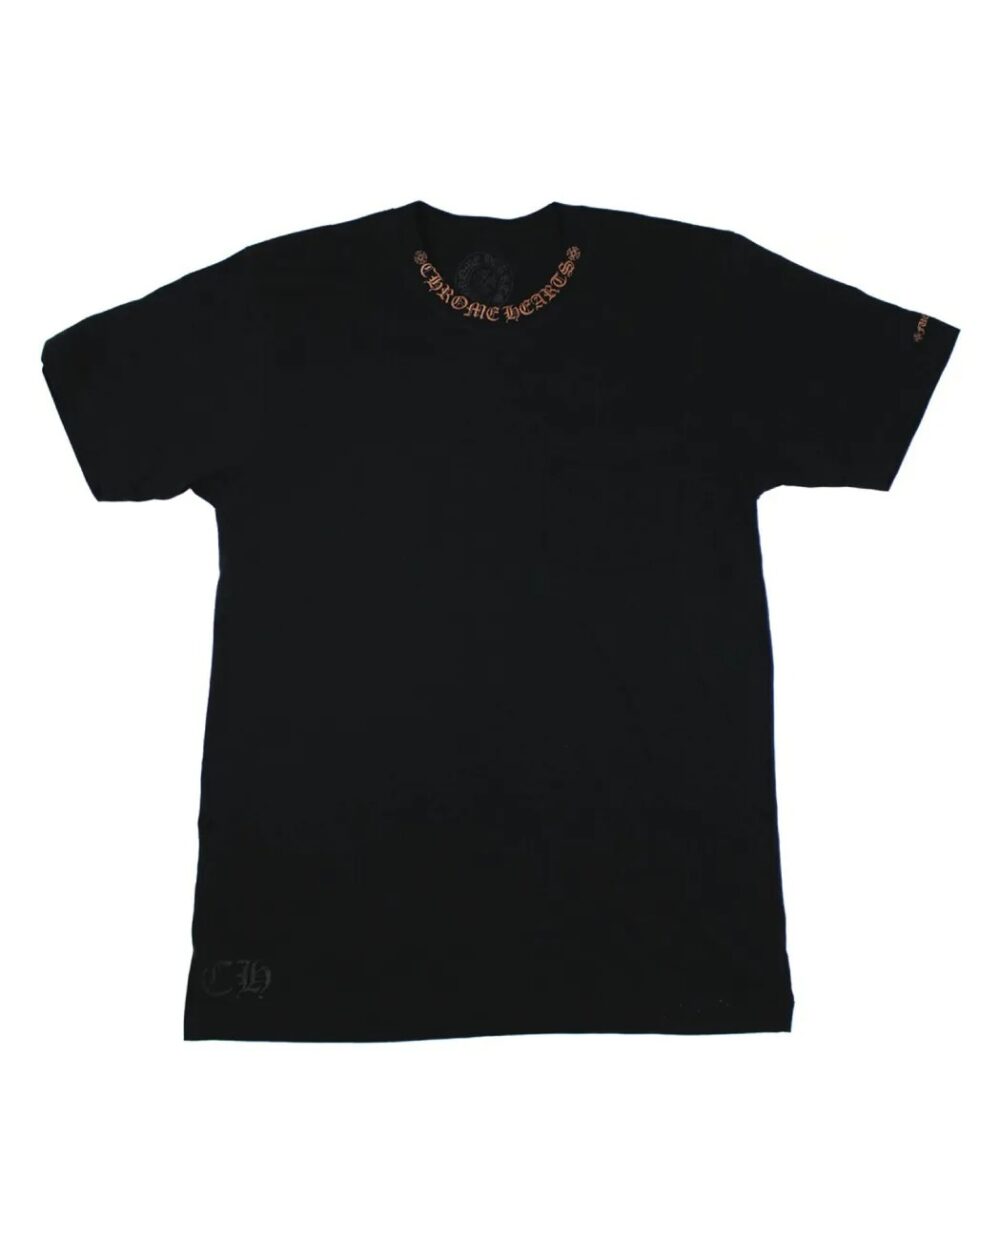 Chrome Hearts Neck Logo T-Shirt – Black